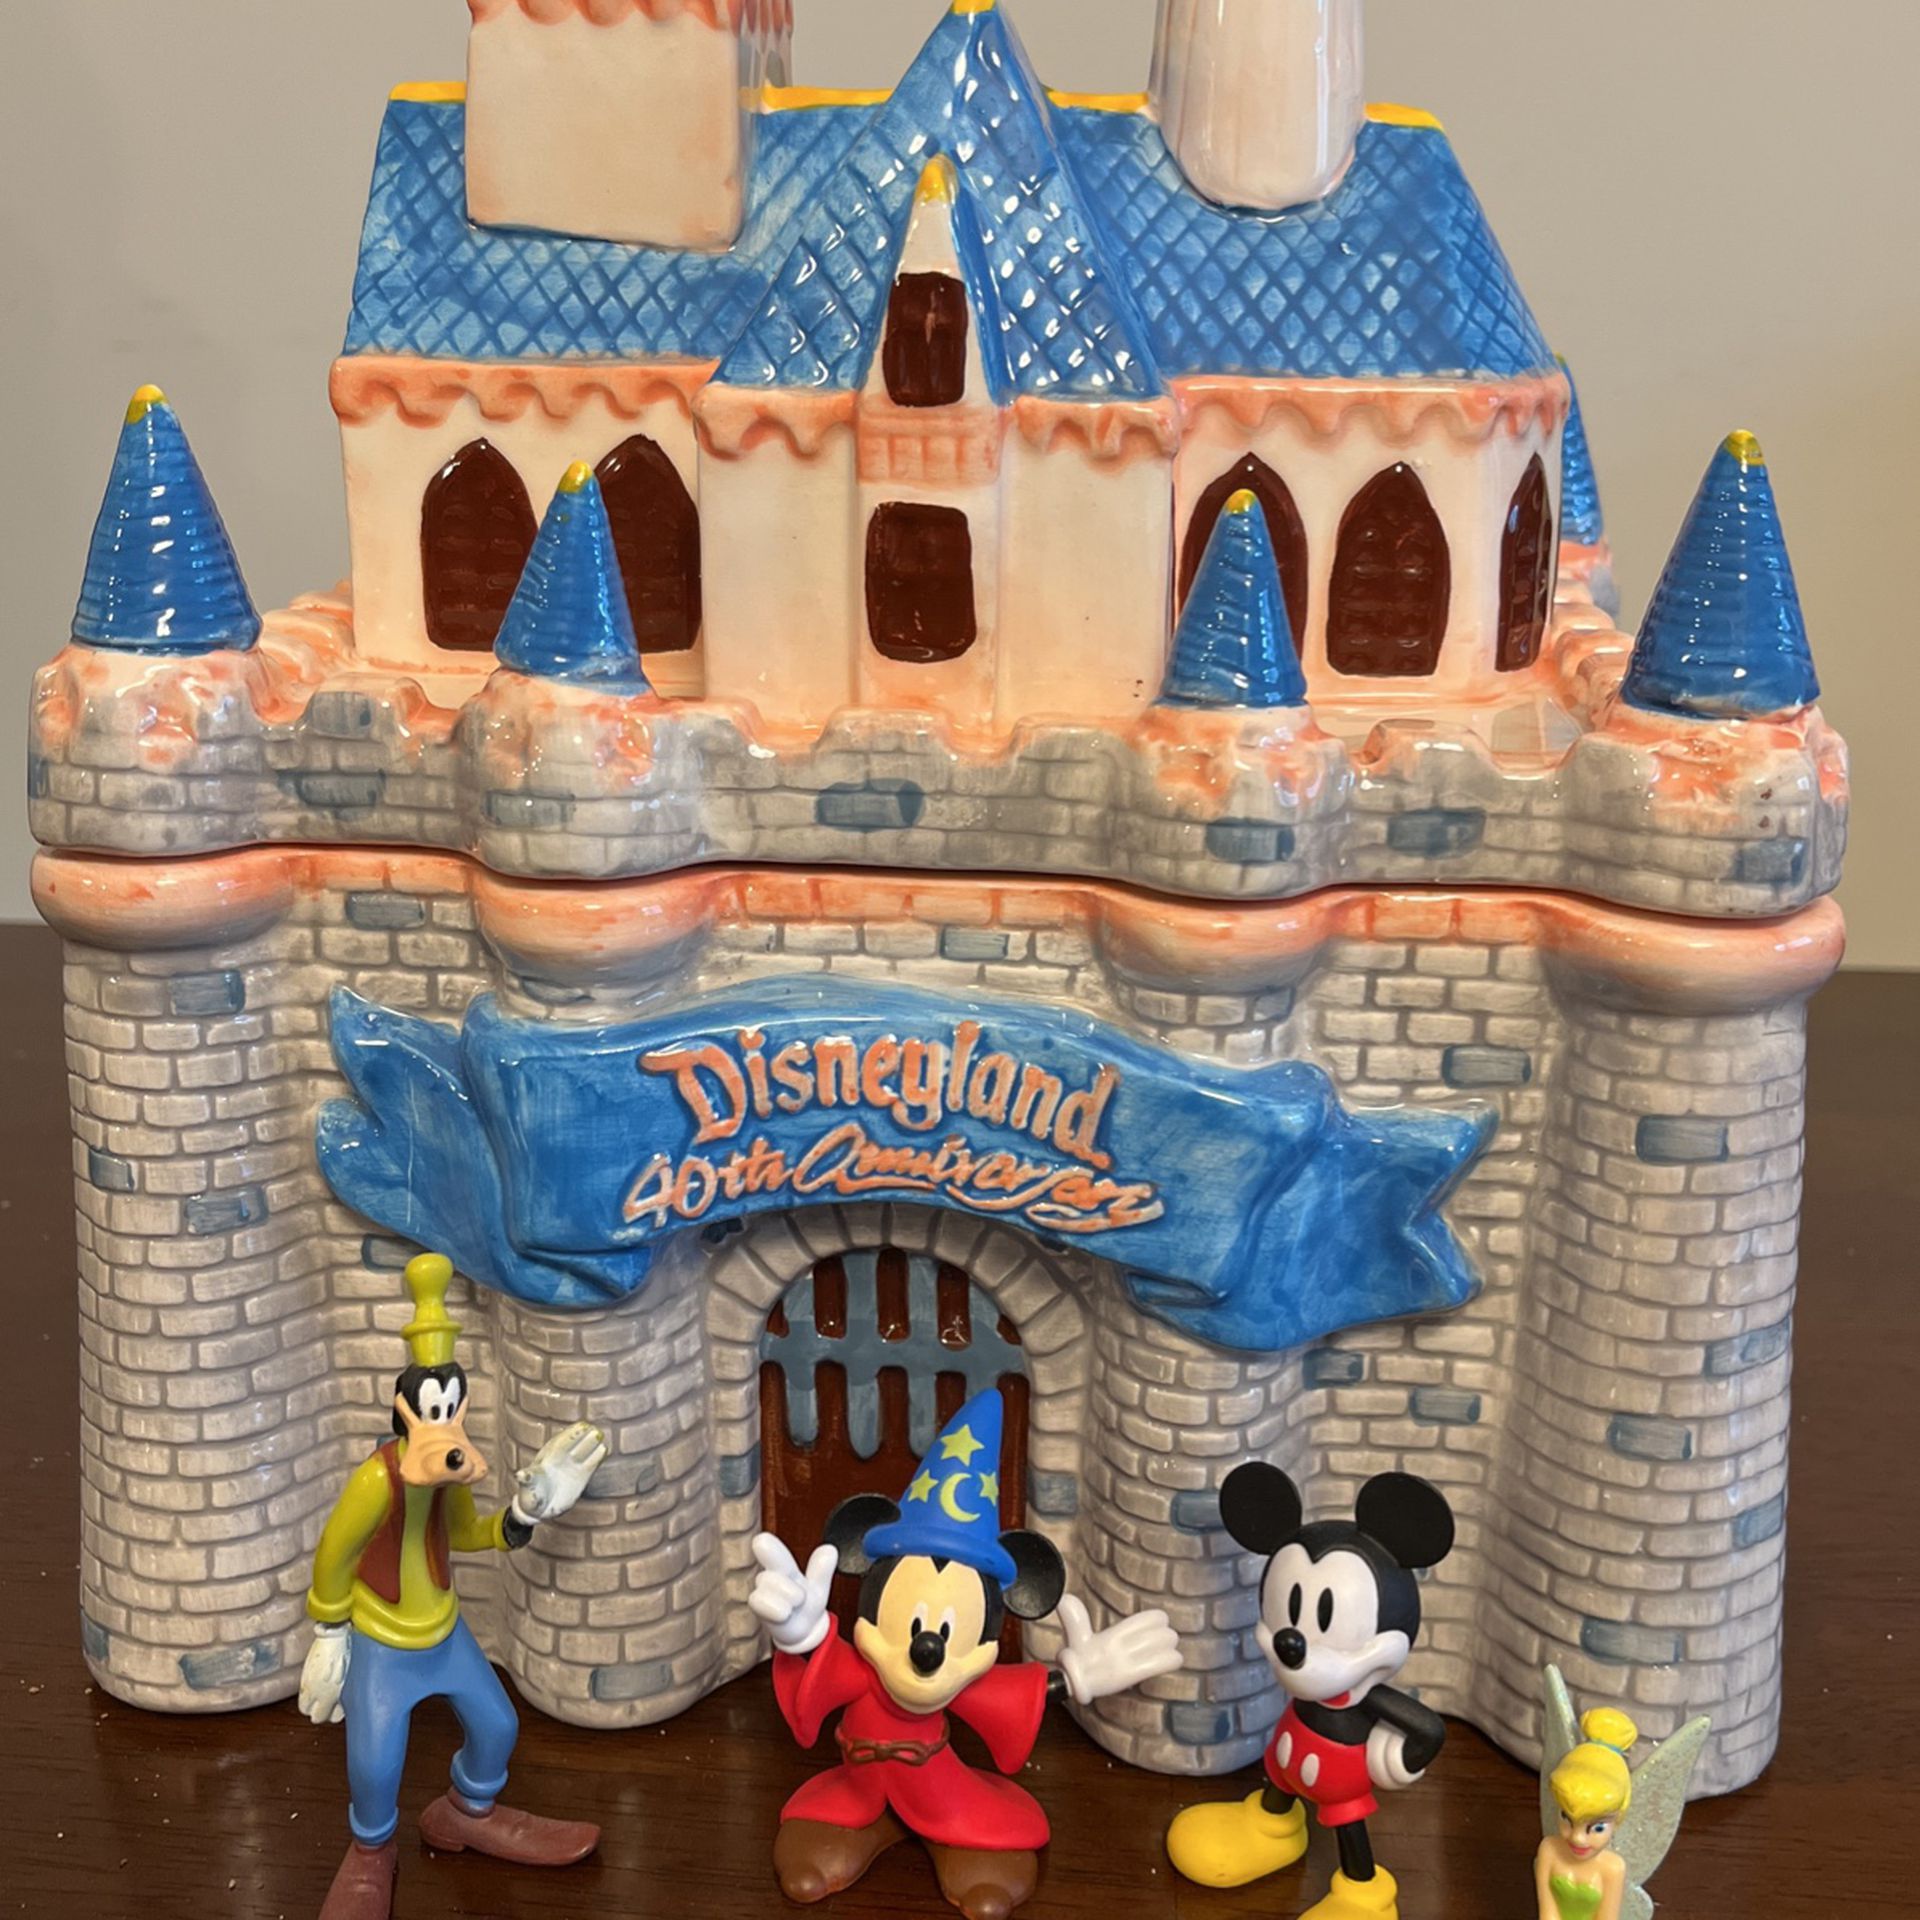 Disneyland 40th Anniversary Cookie Castle